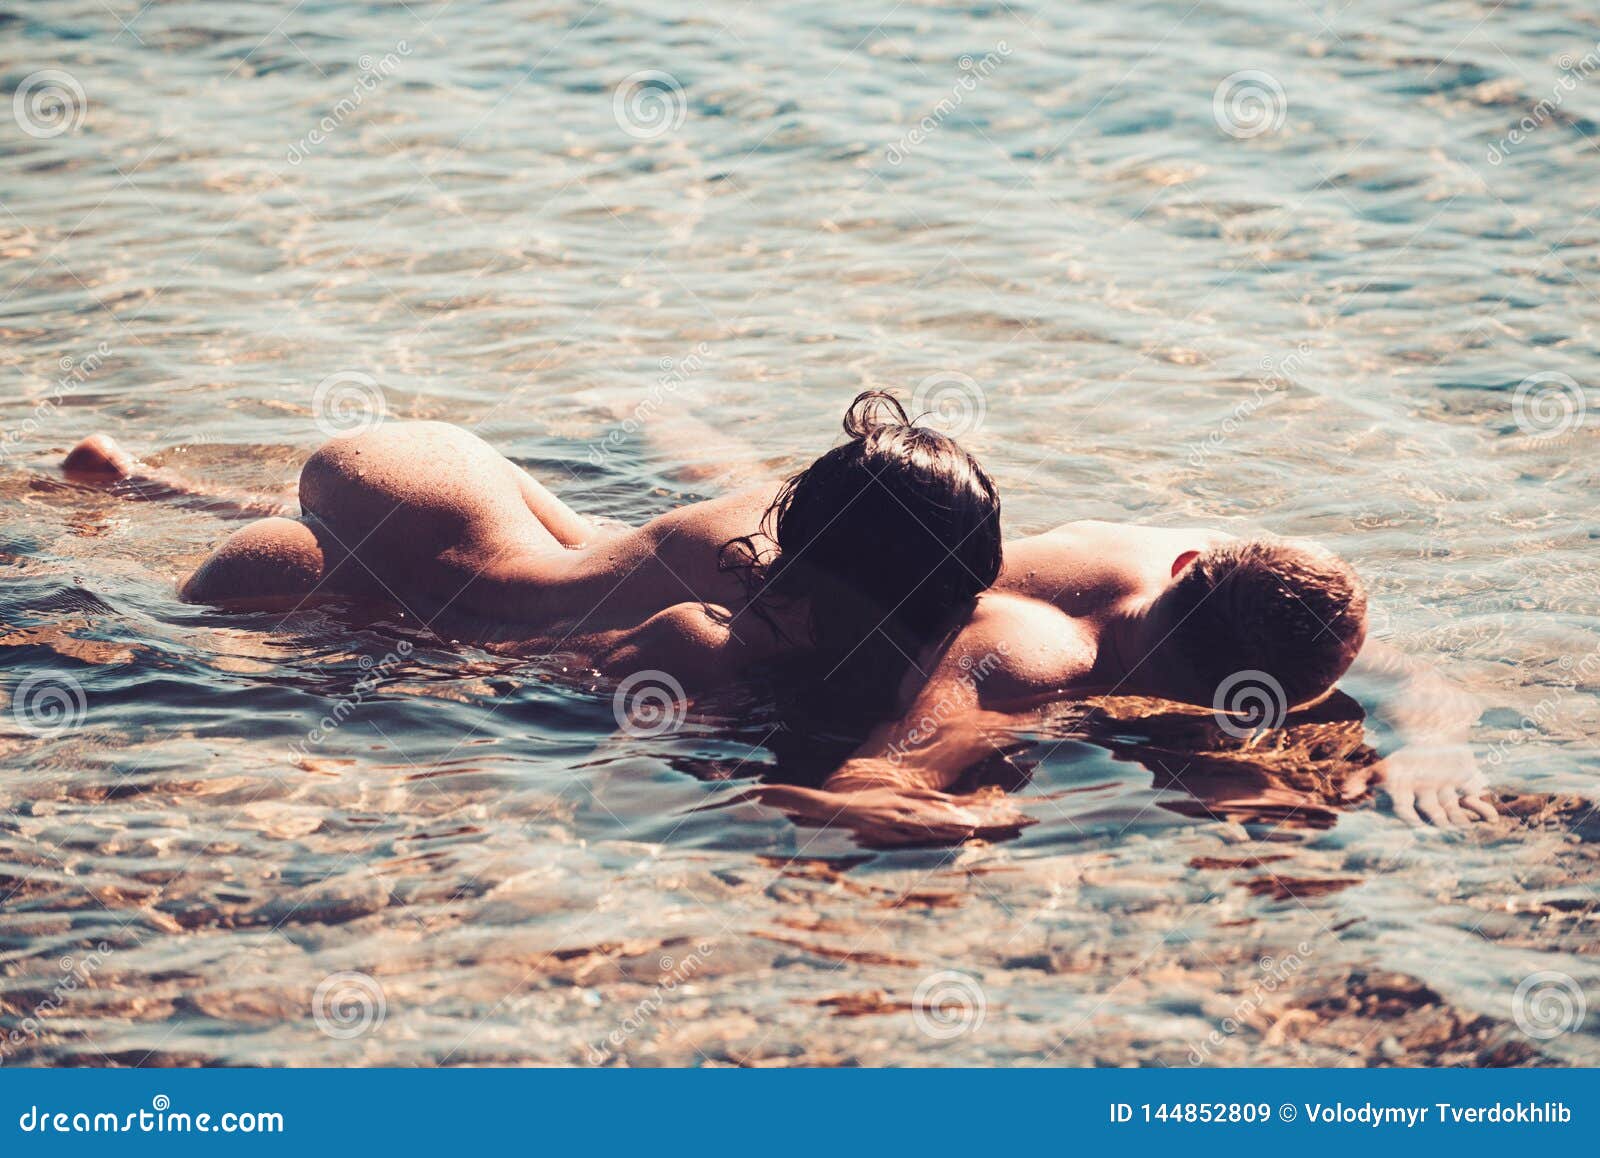 andree saputra add sexual nude beaches photo